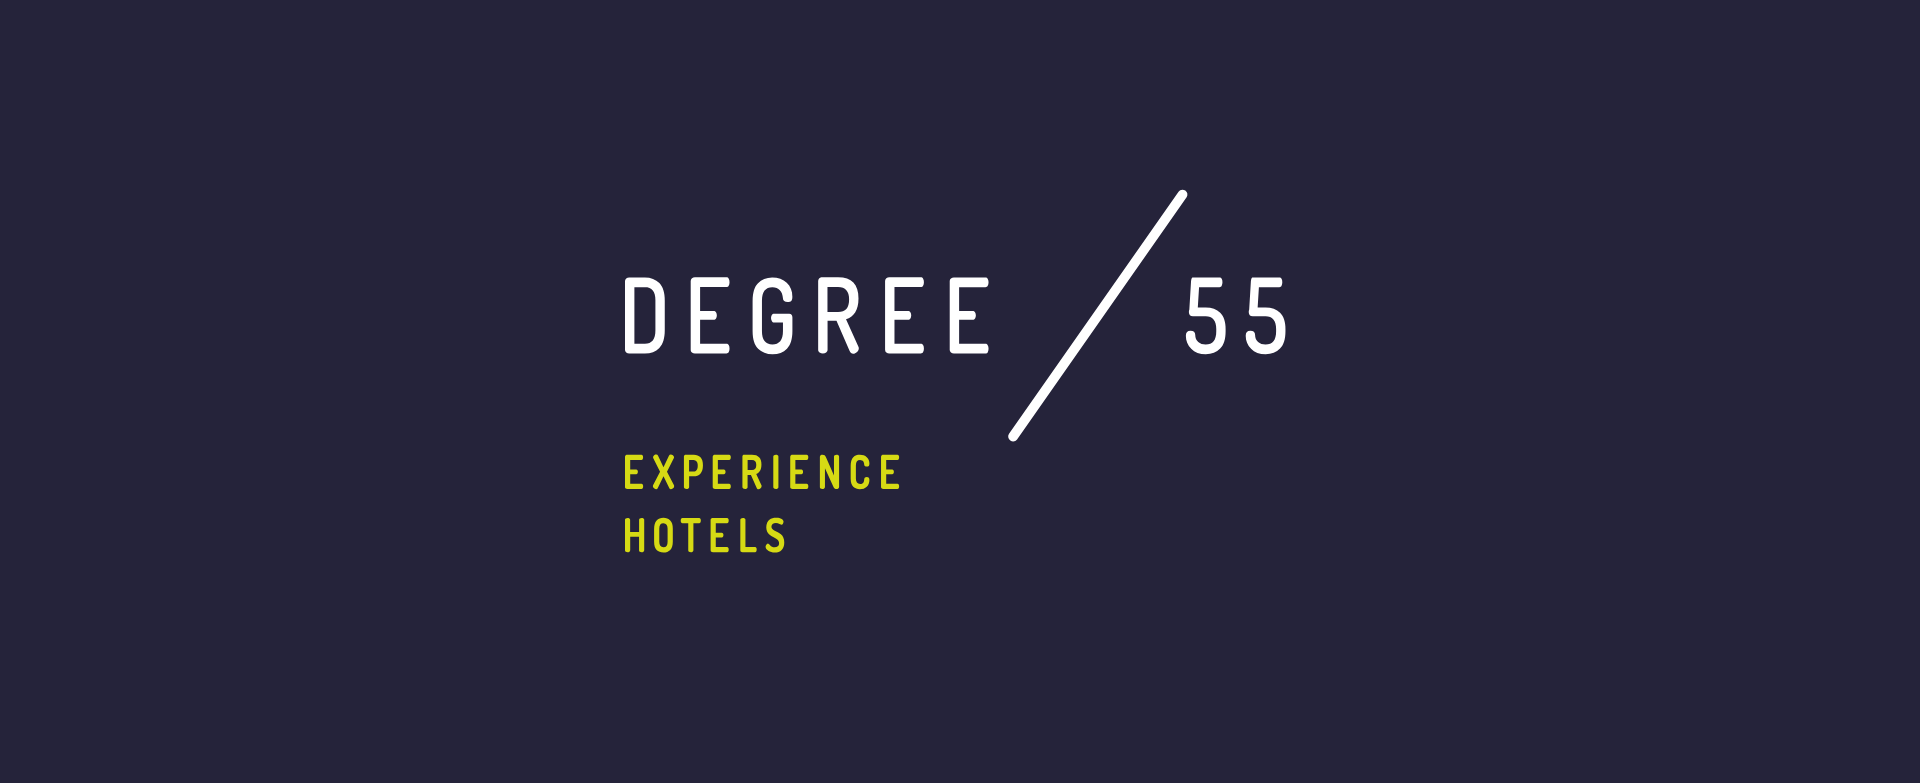 Sanmiguel degree55 hotel corporate identity – 4